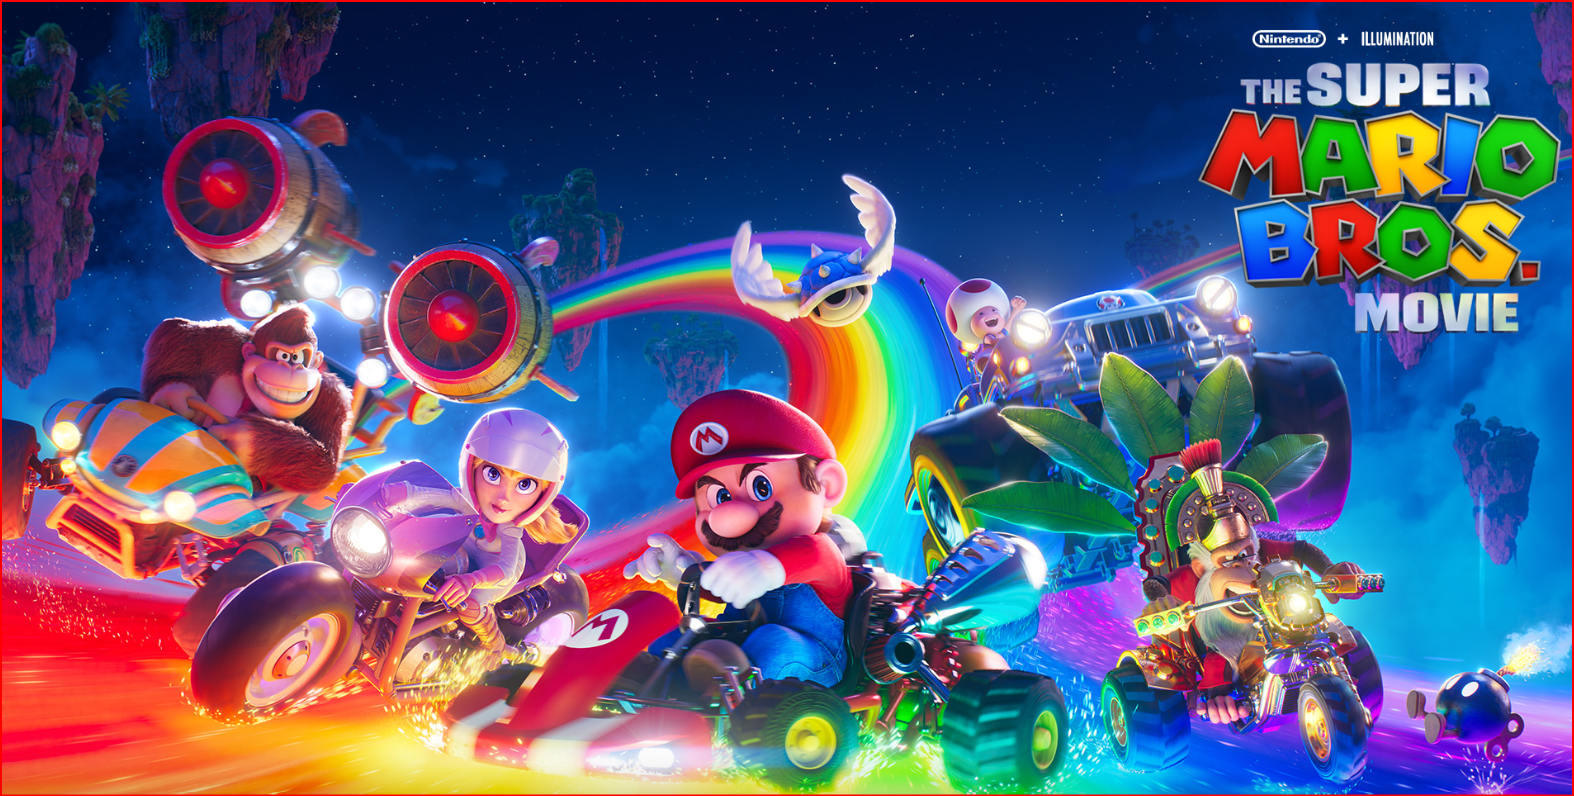 The Super Mario Bros Movie Soundtrack: A Nostalgic Journey Through Mario's Musical World